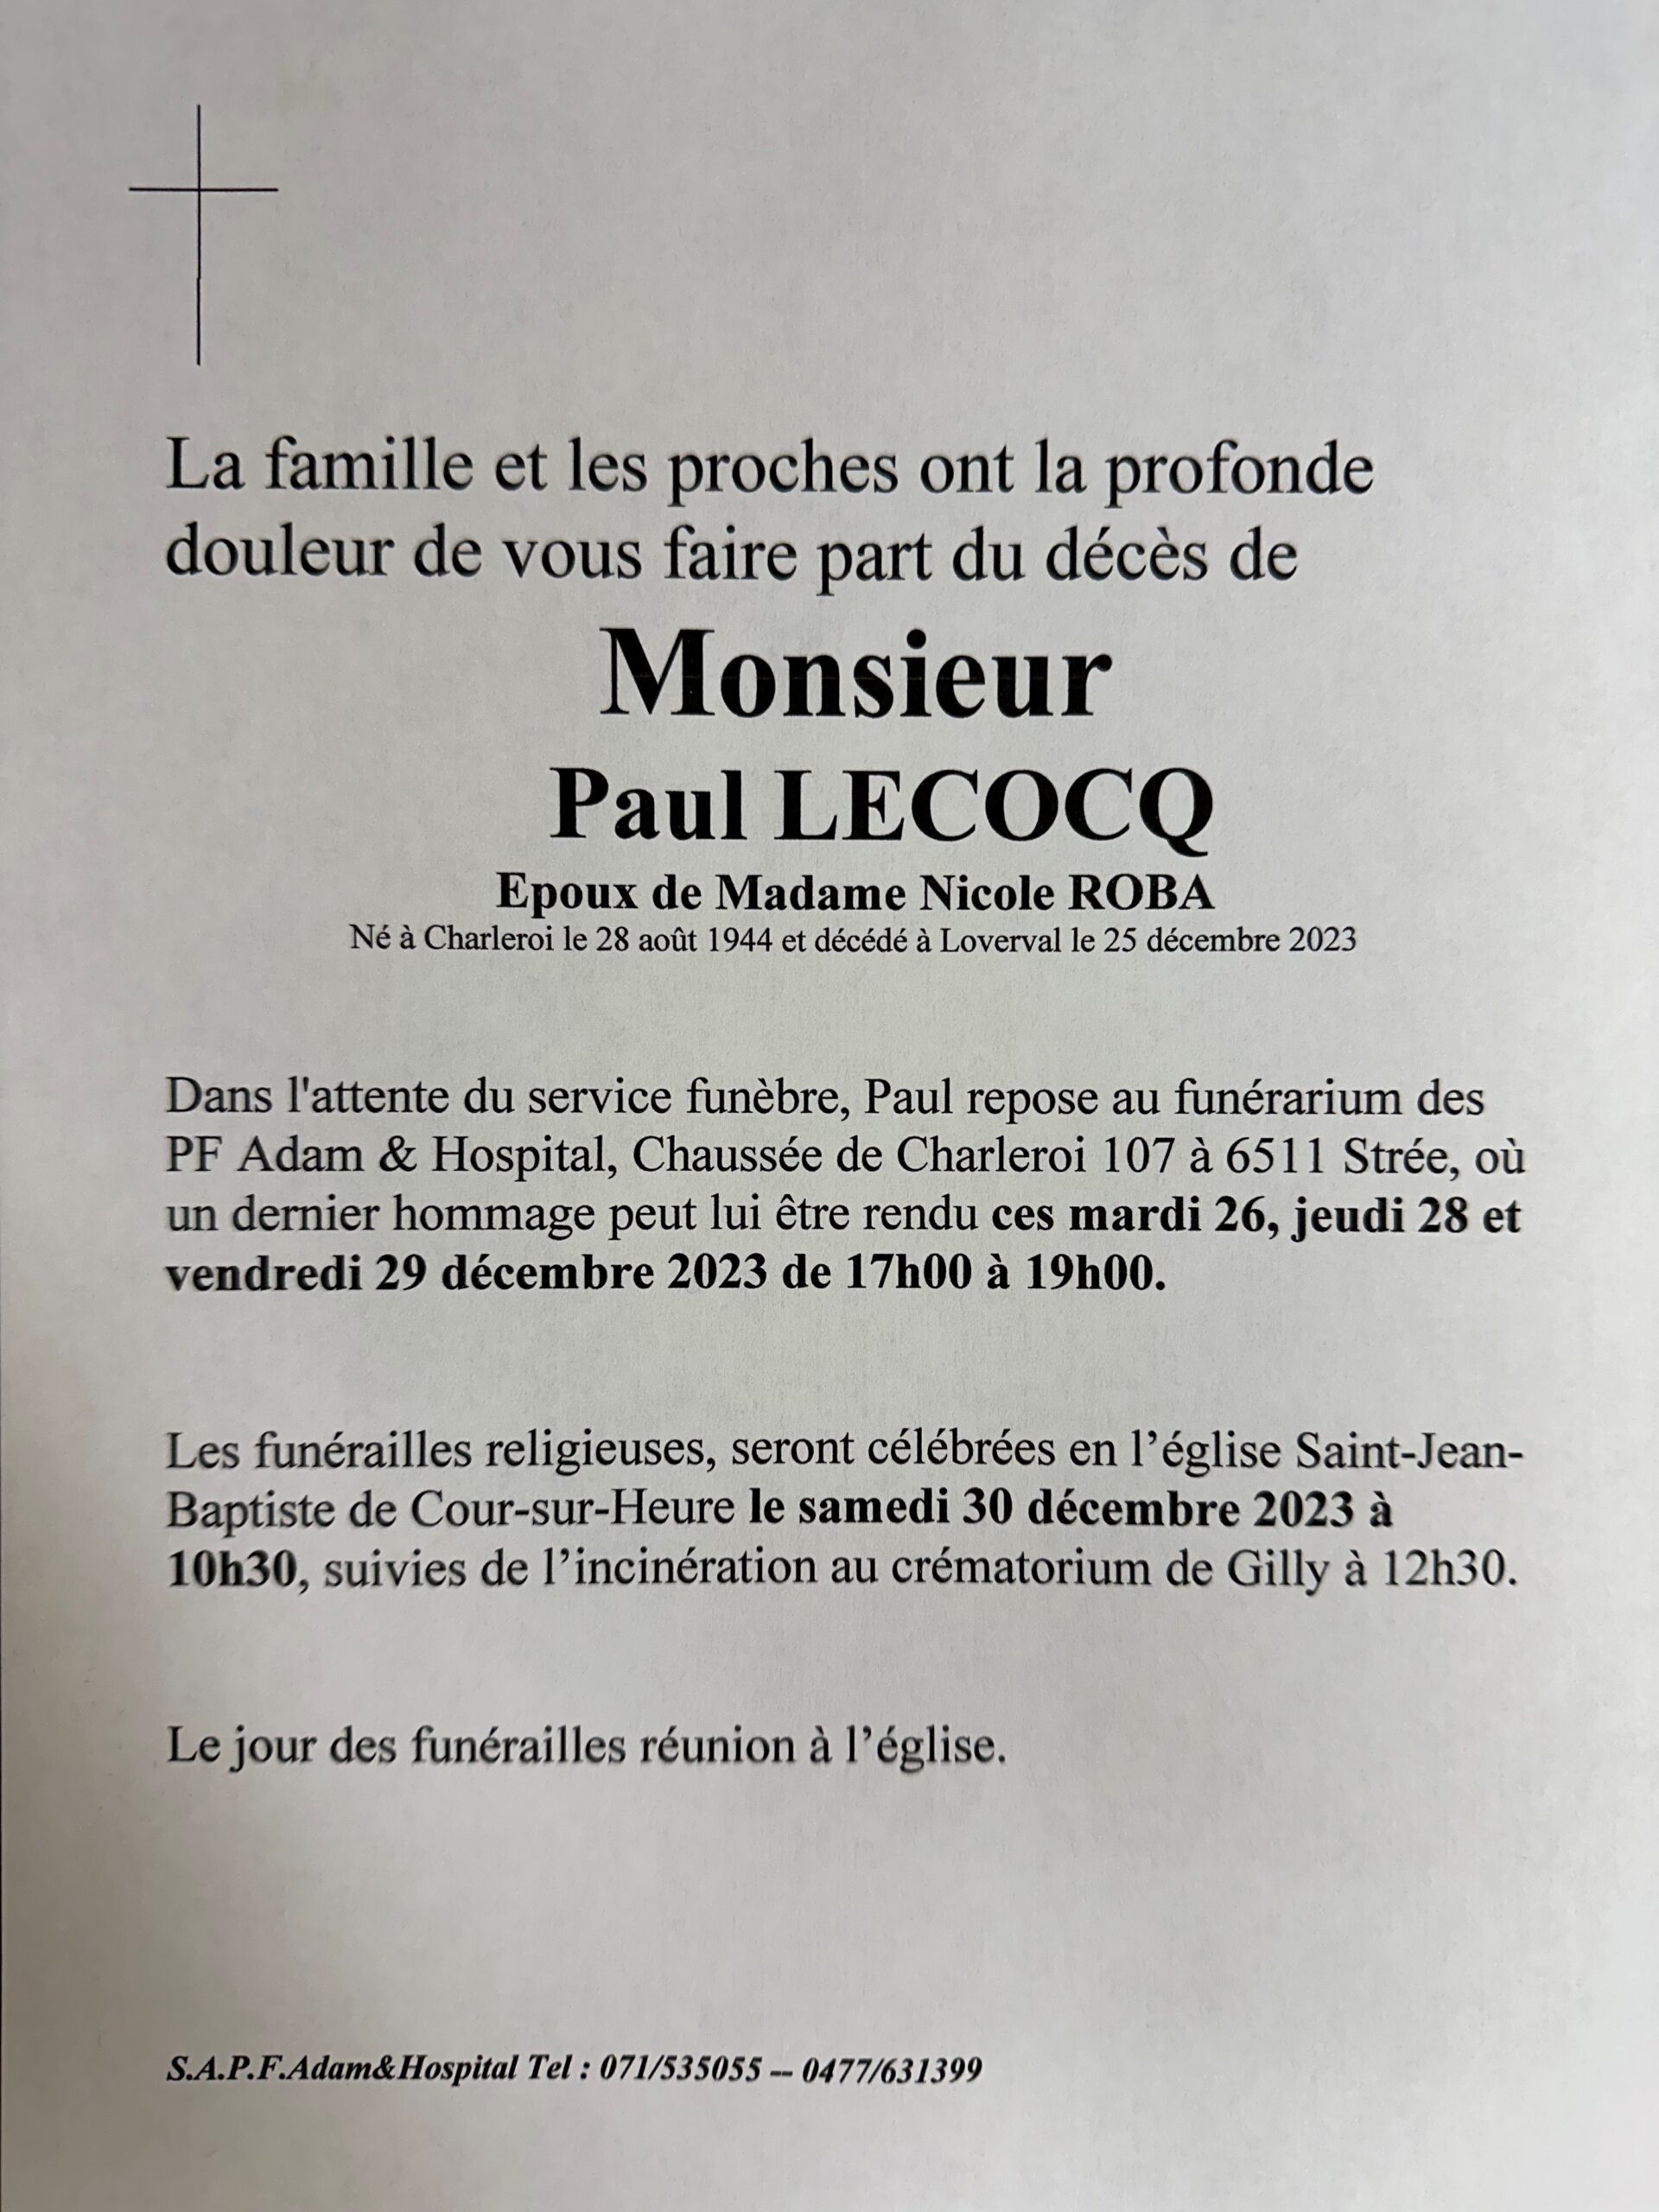 Paul LECOCQ scaled | Funérailles Adam Hospital